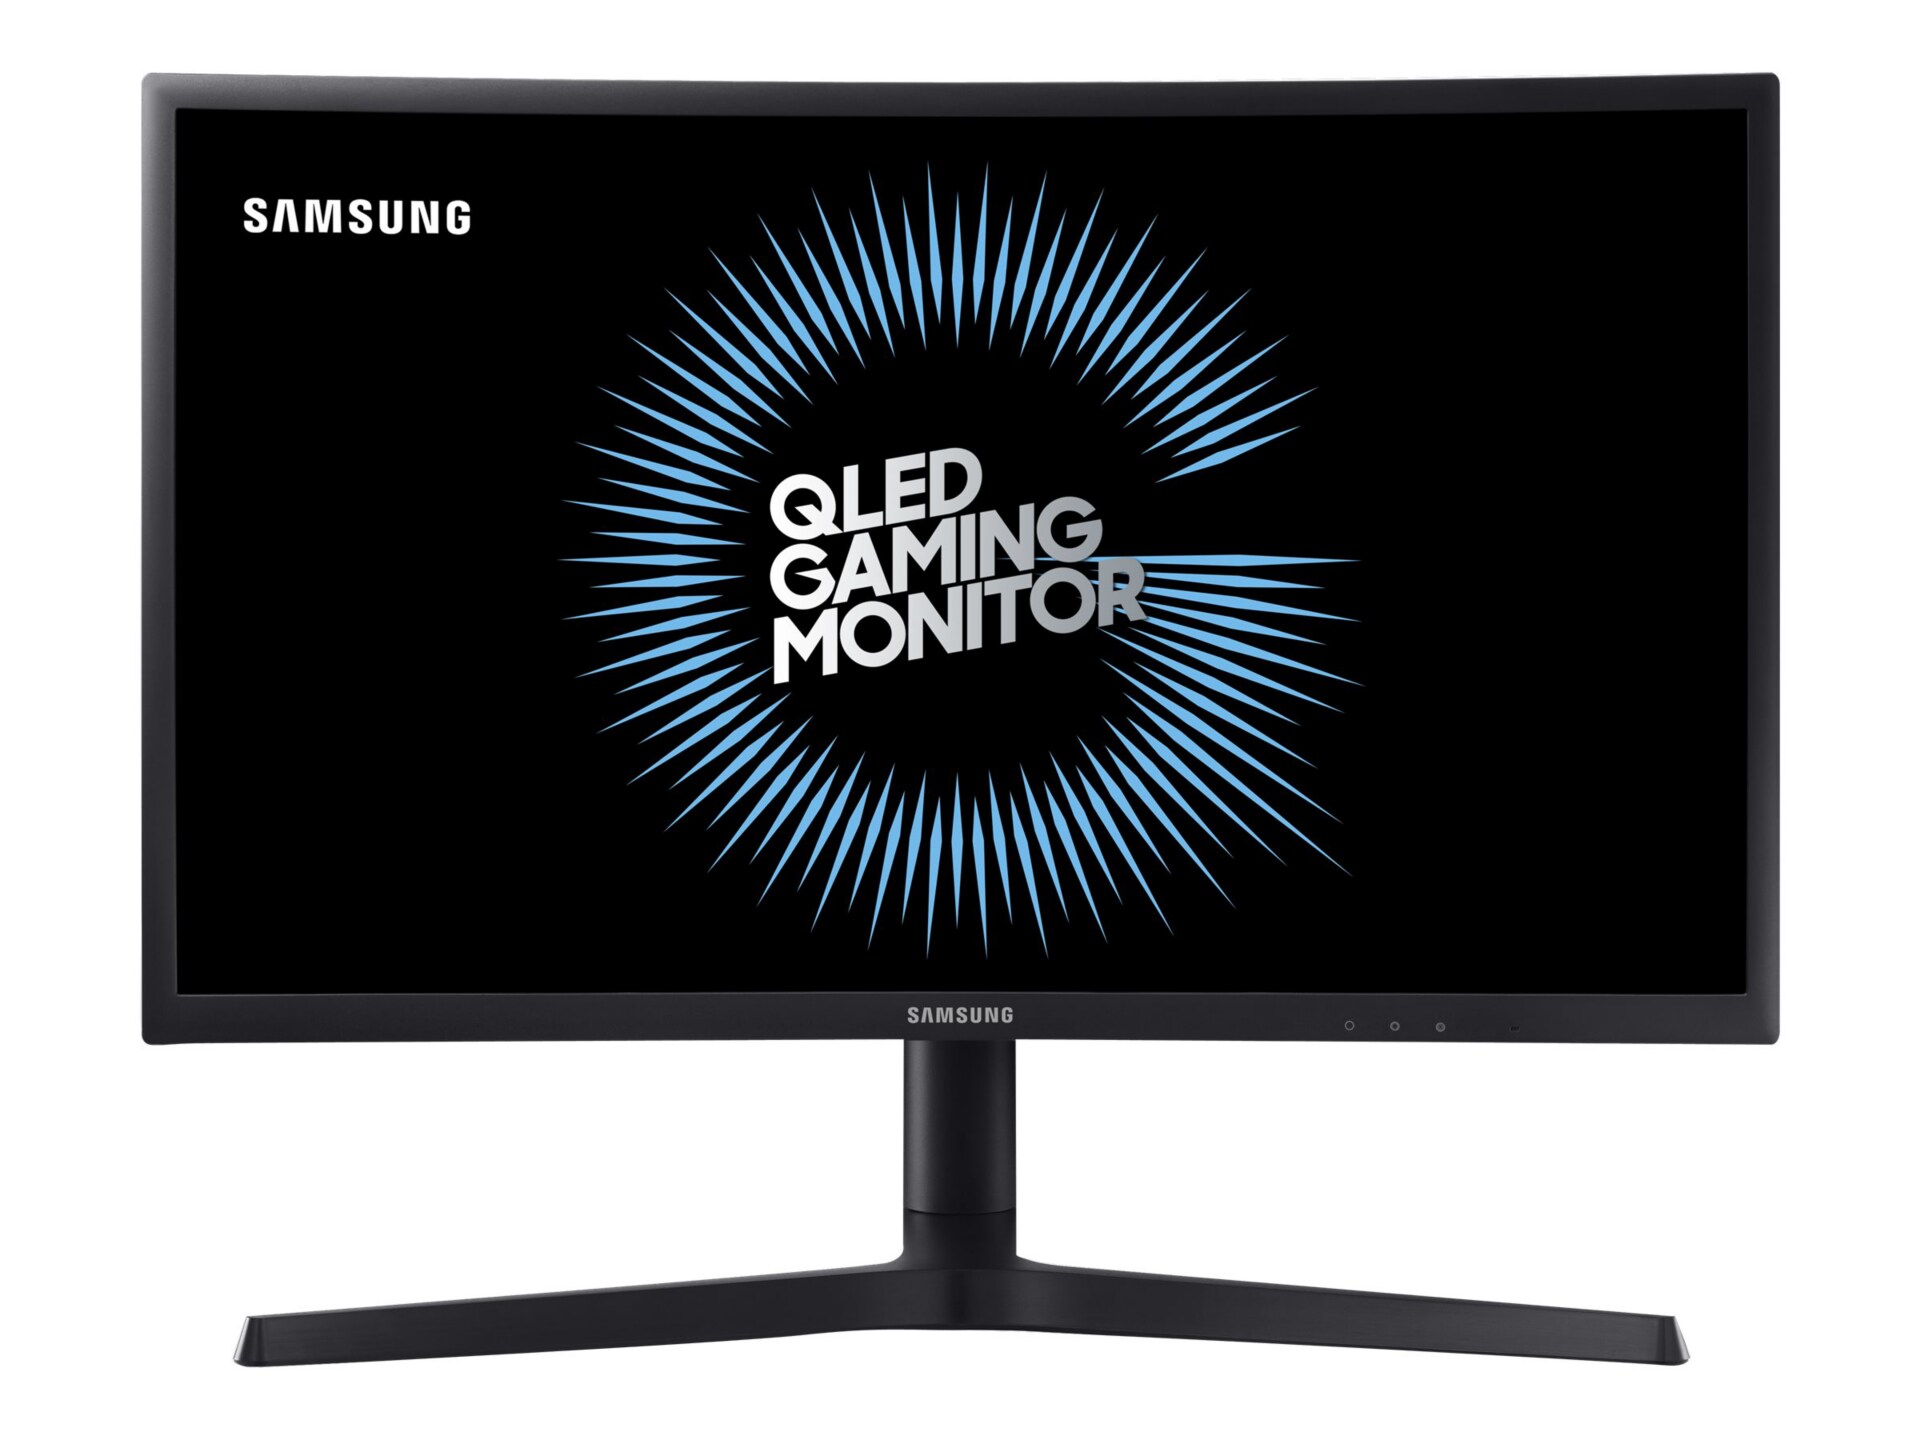 Samsung CFG7 Series C24FG73FQN - LED monitor - curved - Full HD (1080p) - 2